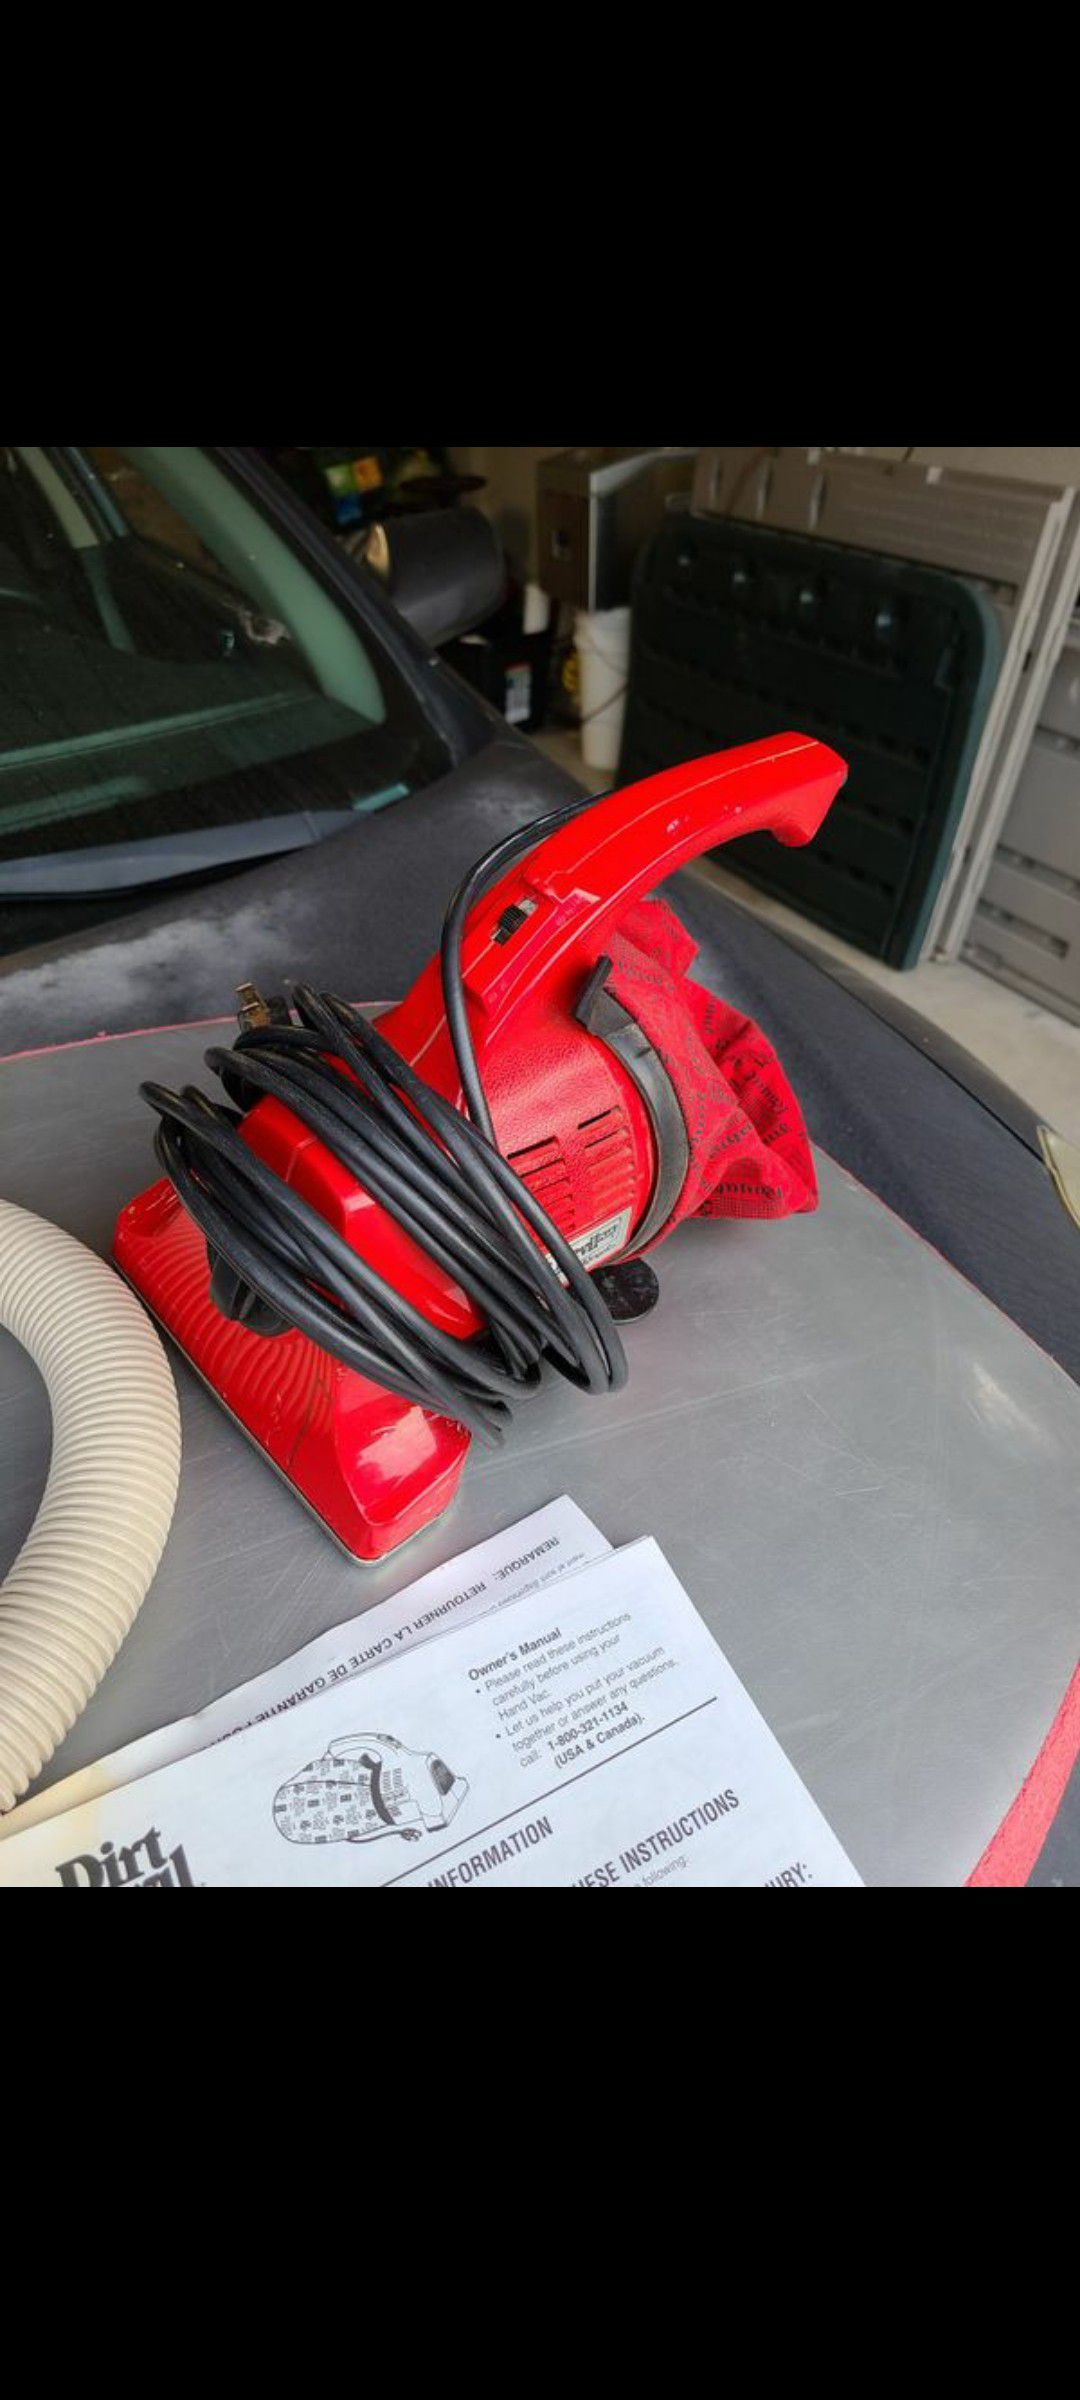 Dirt Devil Handheld Vacuum with attachments